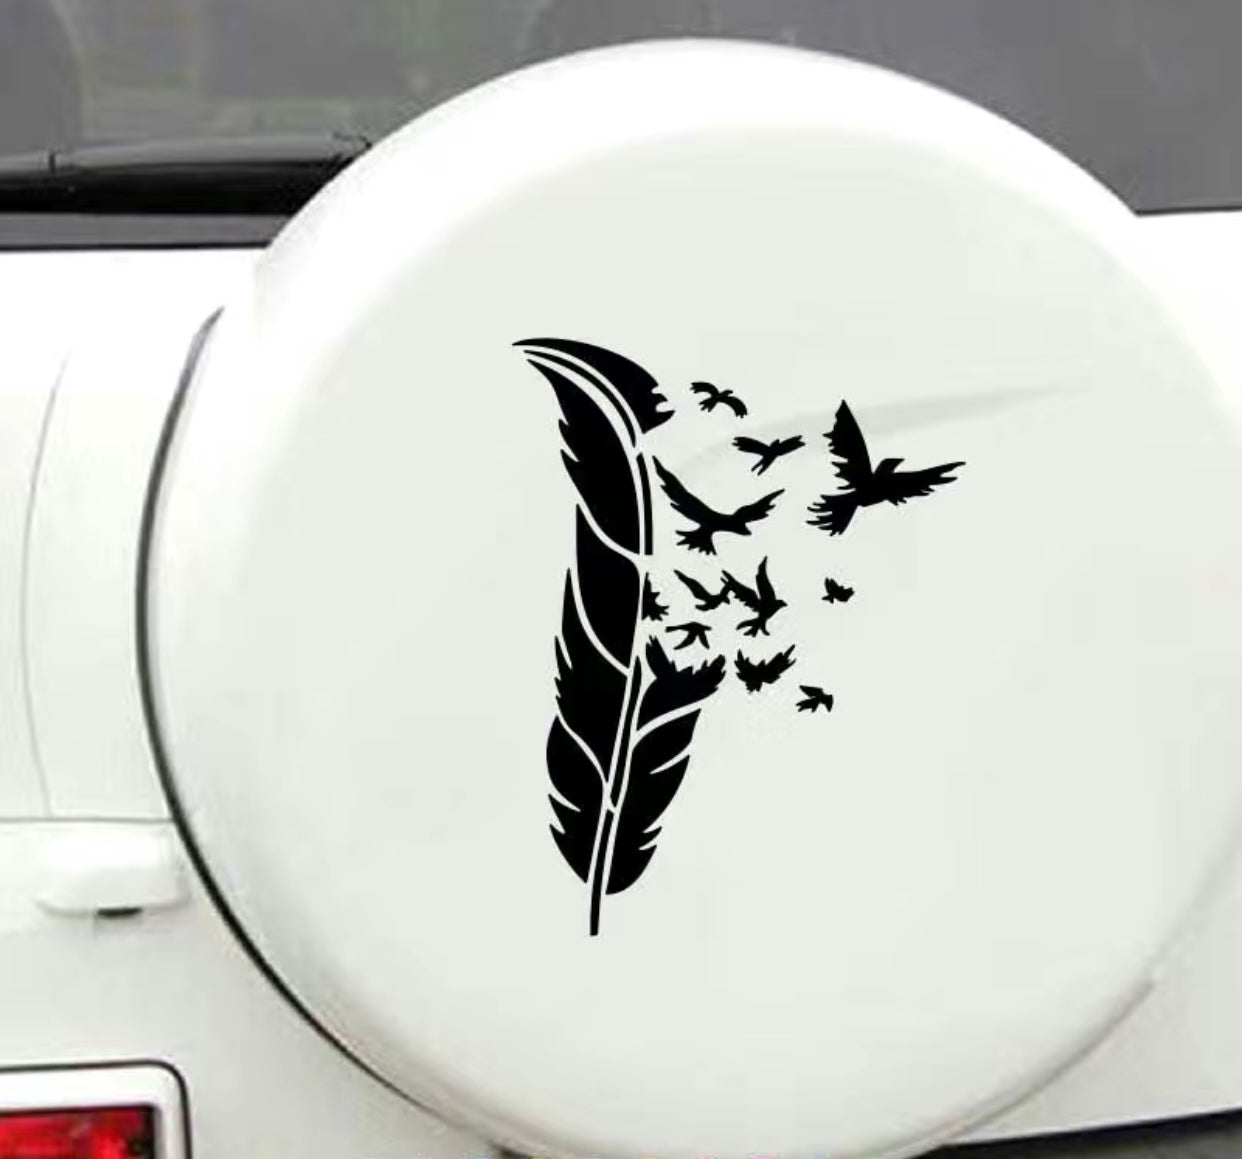 Feather & Eagles Vinyl X-Large Reflective Sticker Decal Car-Caravan-Horsefloat